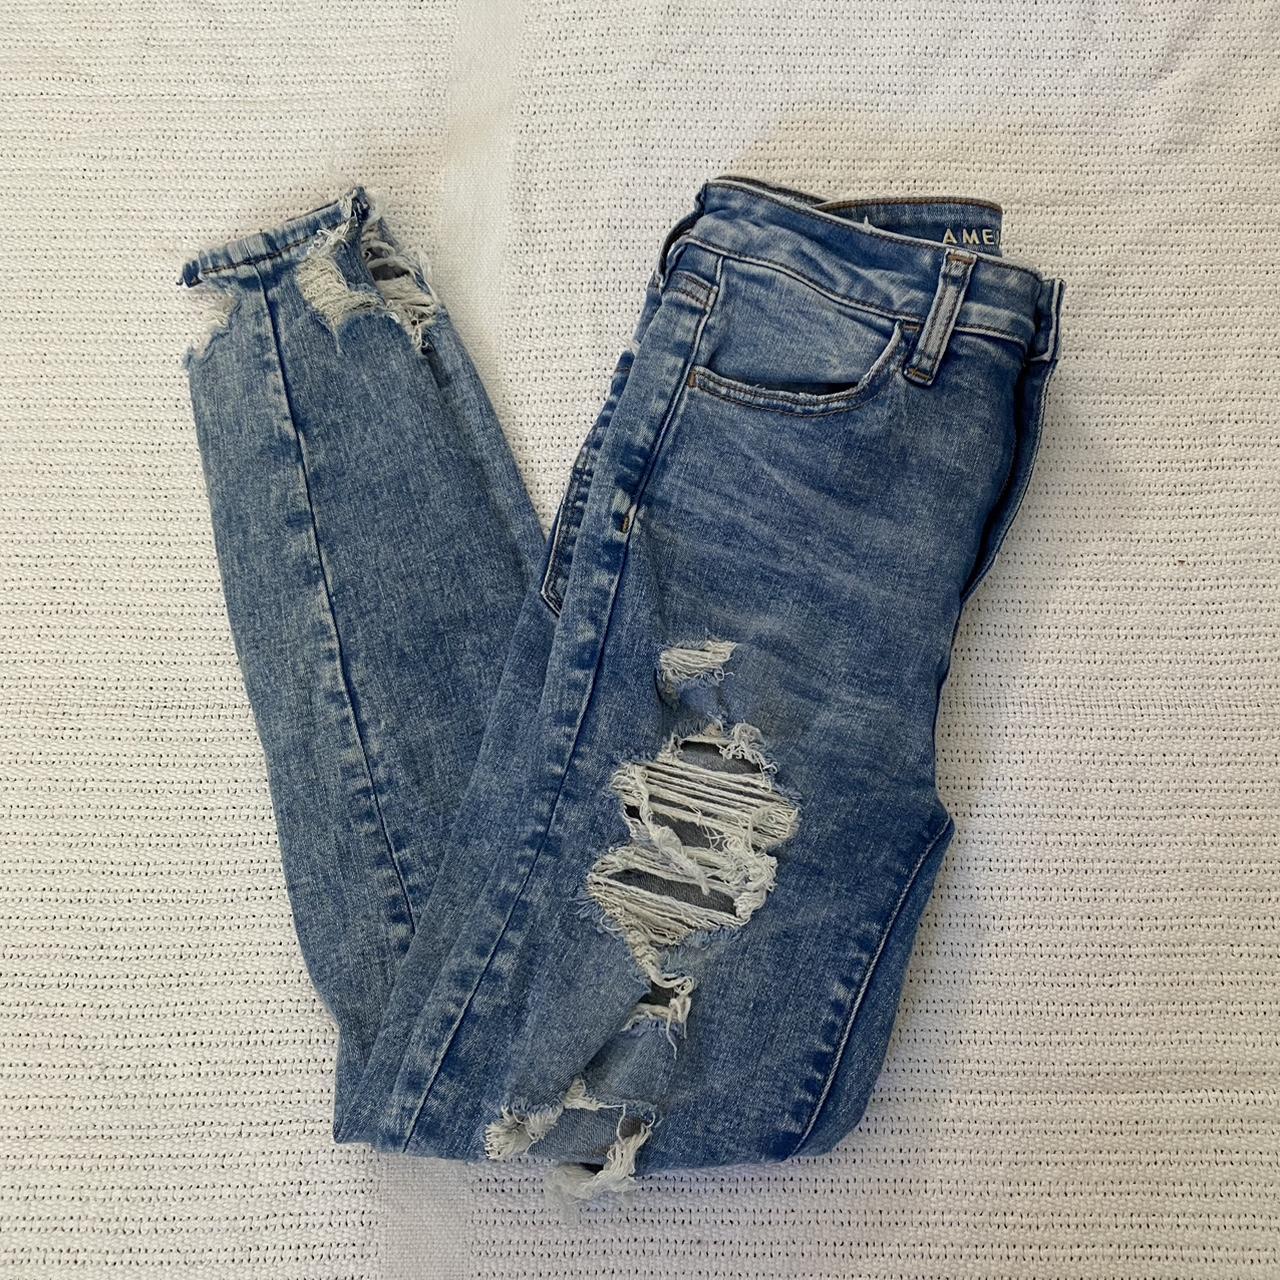 American Eagle Light Wash Distressed Jeans - Depop